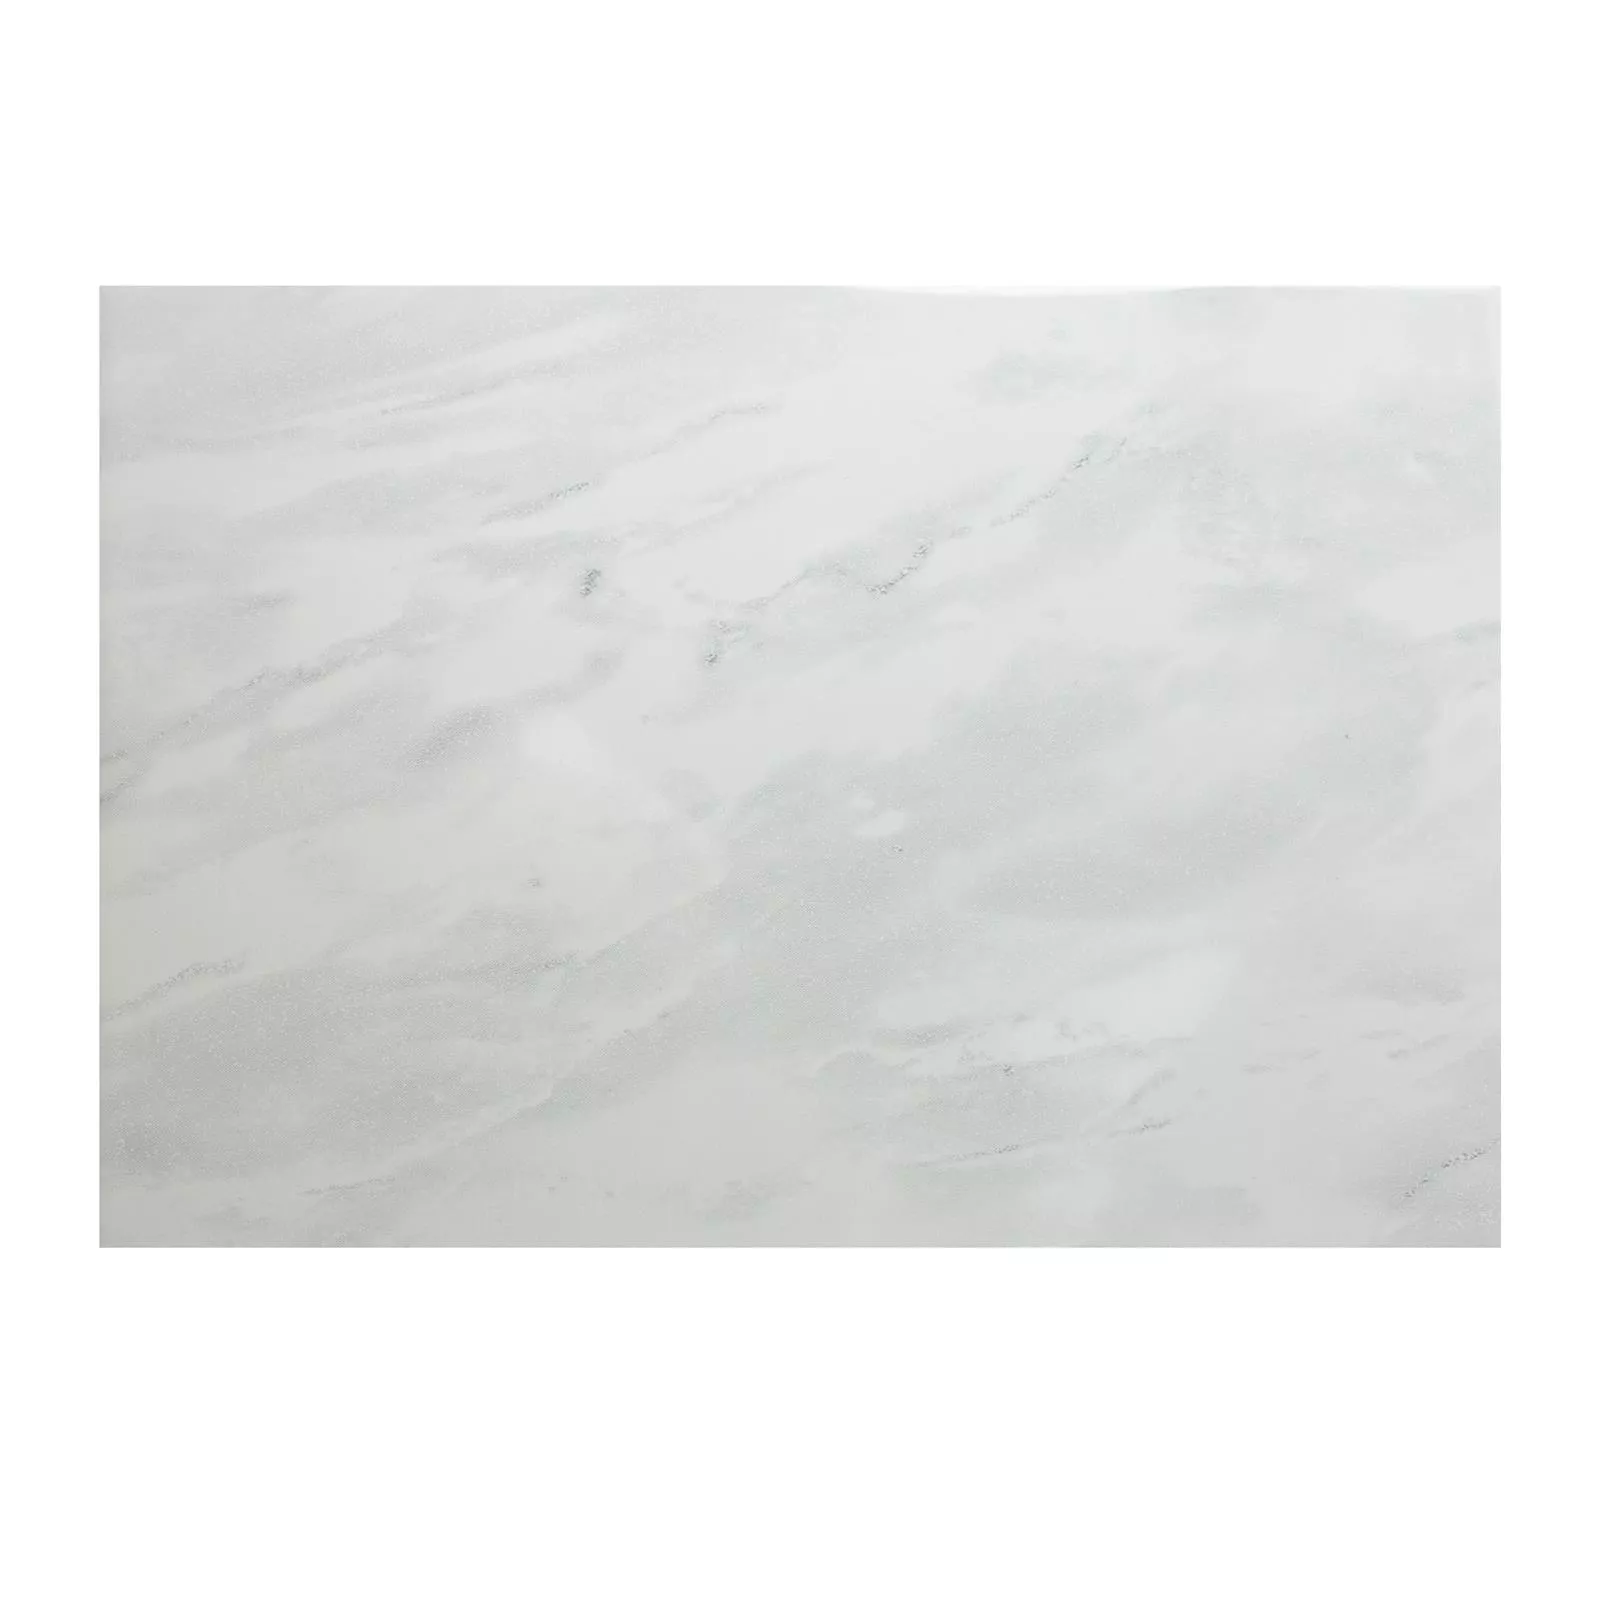 Sample Wall Tile Aspach Marbled Grey 20x25cm Glossy